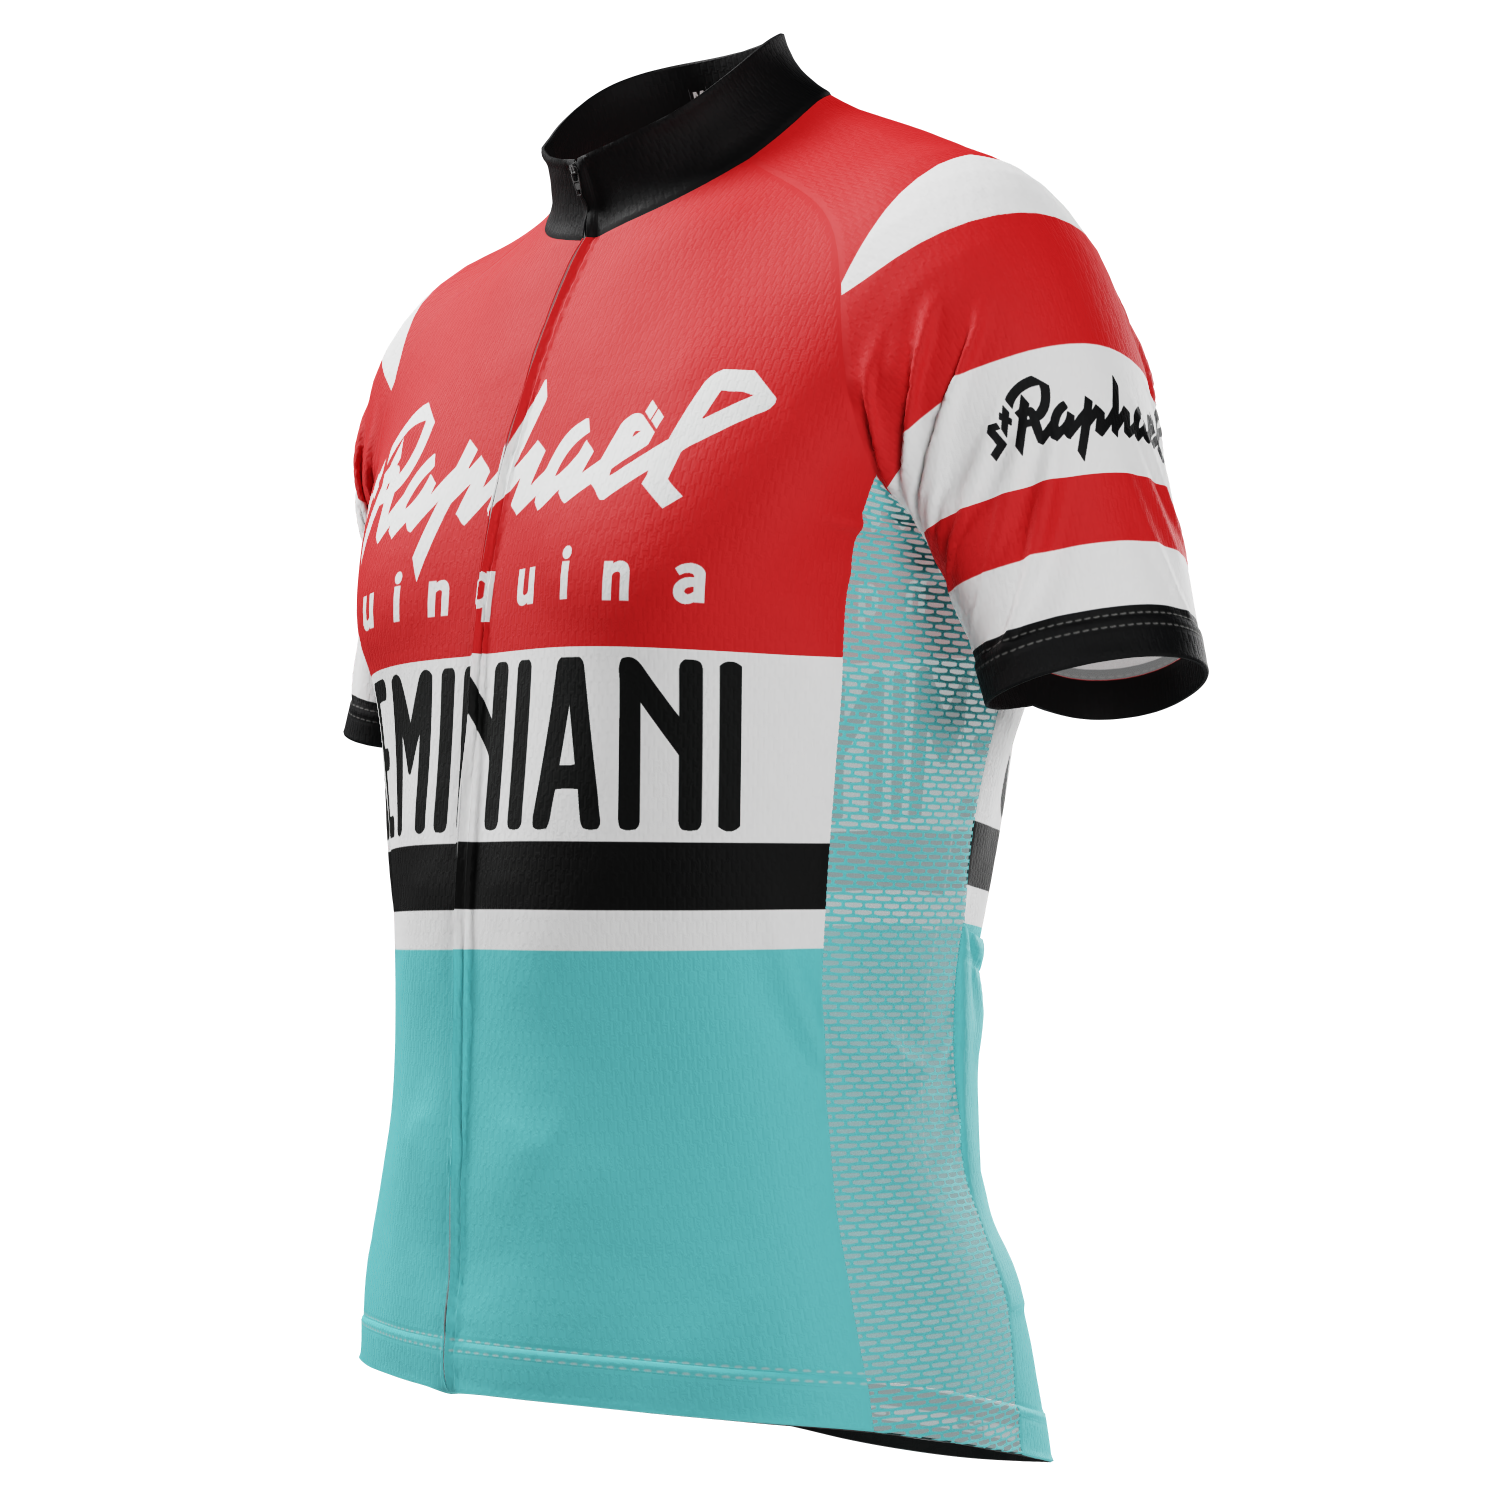 Men's St Raphael-Geminiani Retro Short Sleeve Cycling Jersey